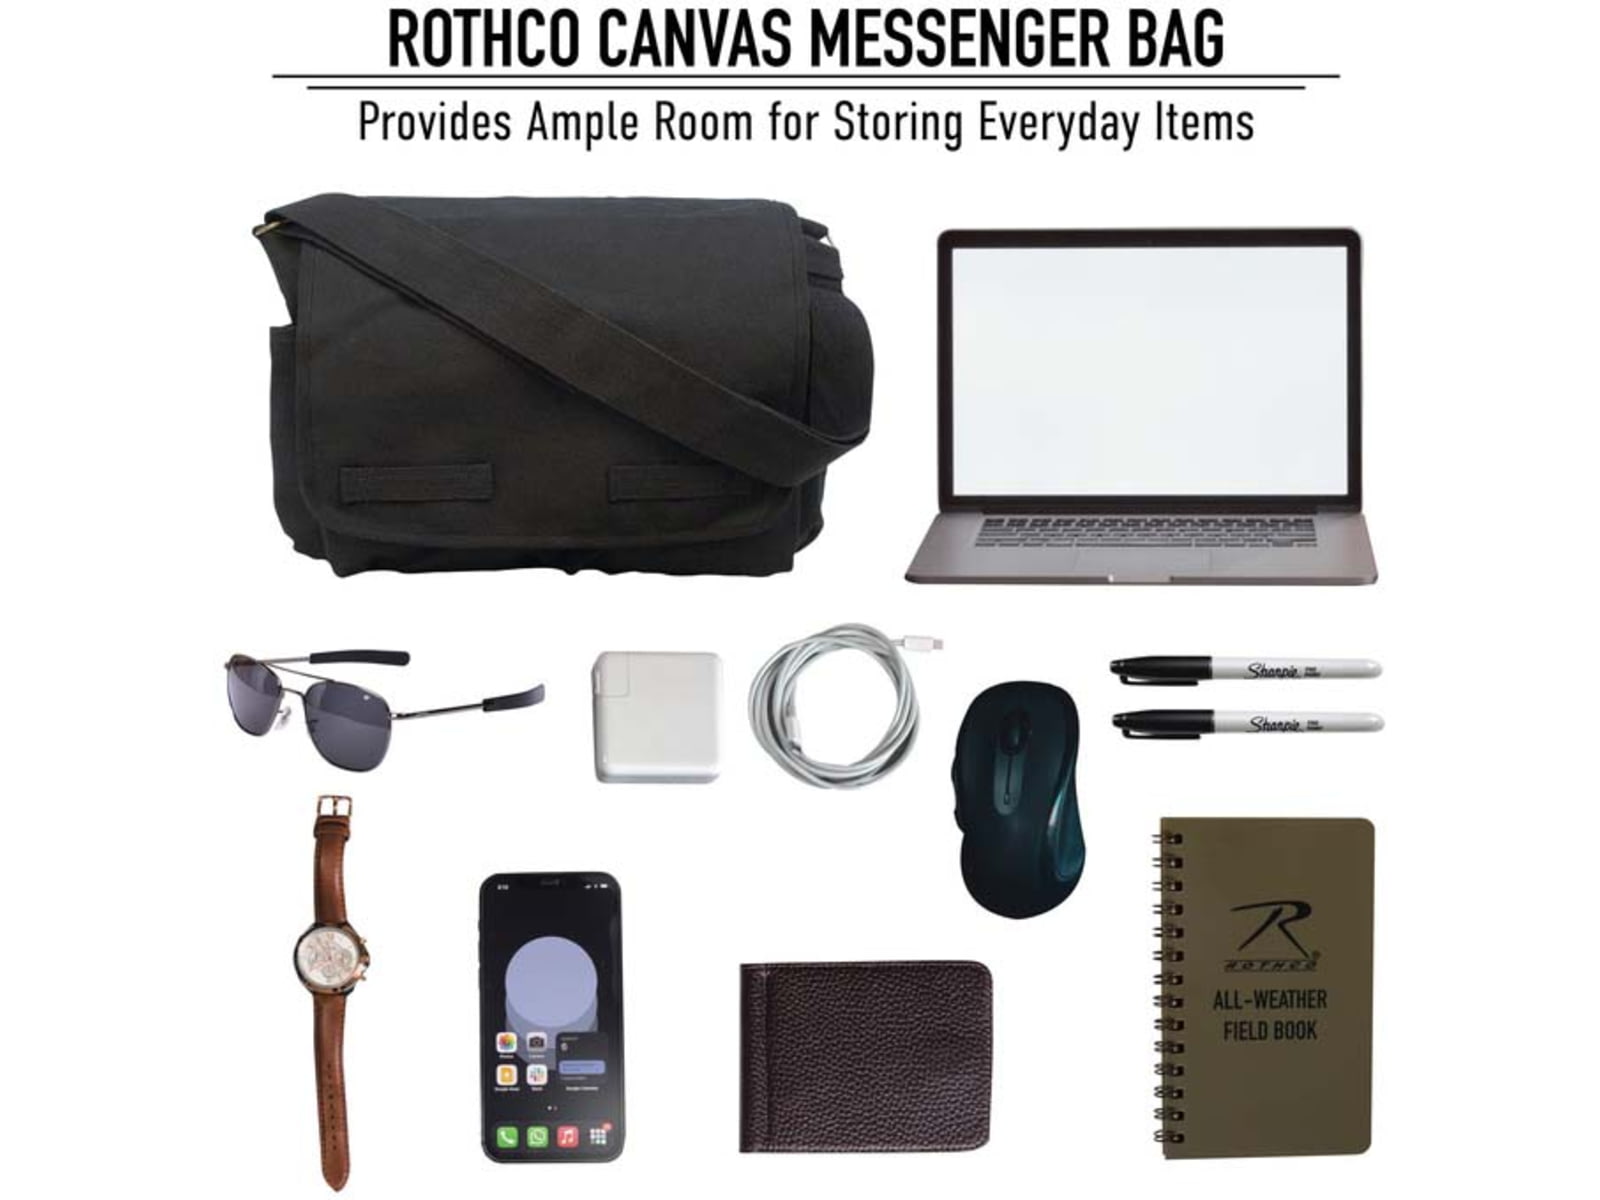 Rothco Classic Canvas Messenger Bag, Black - image 2 of 3